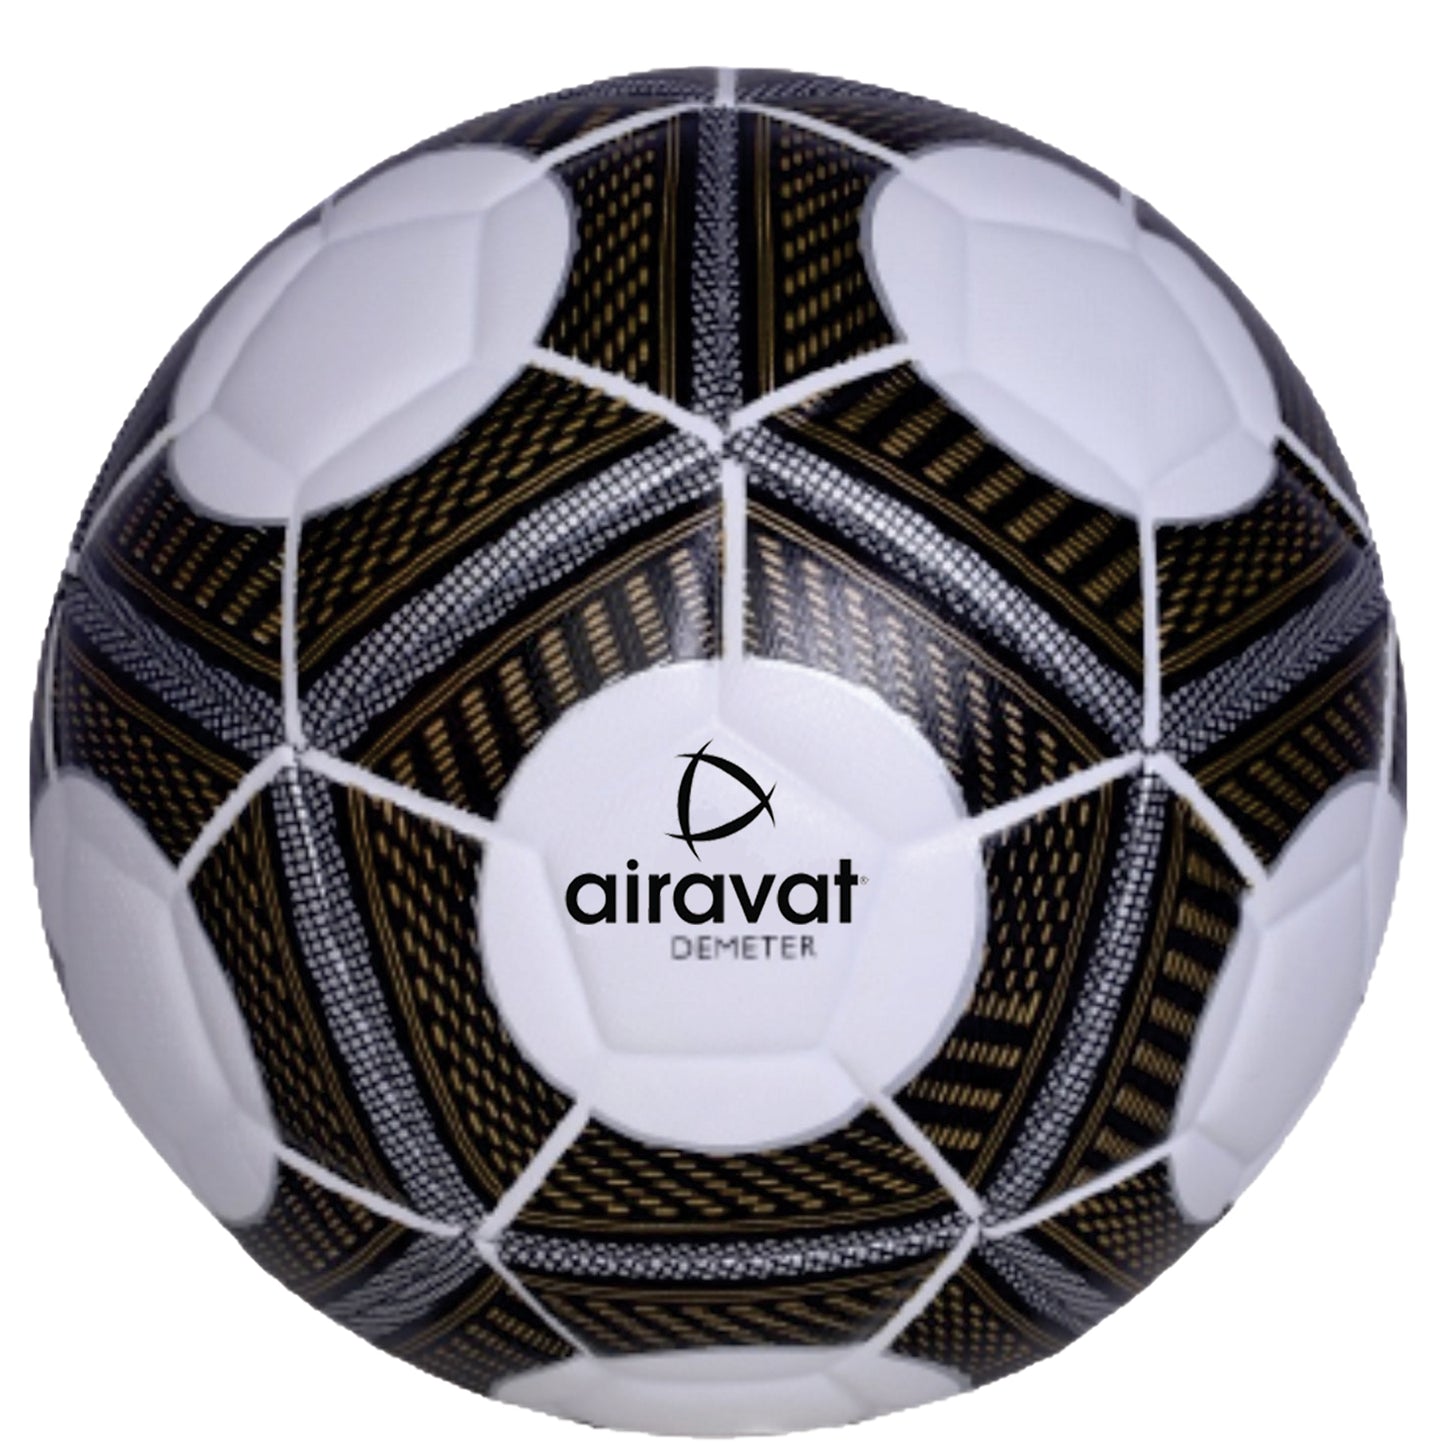 Demeter-Football-ball-main-image-white